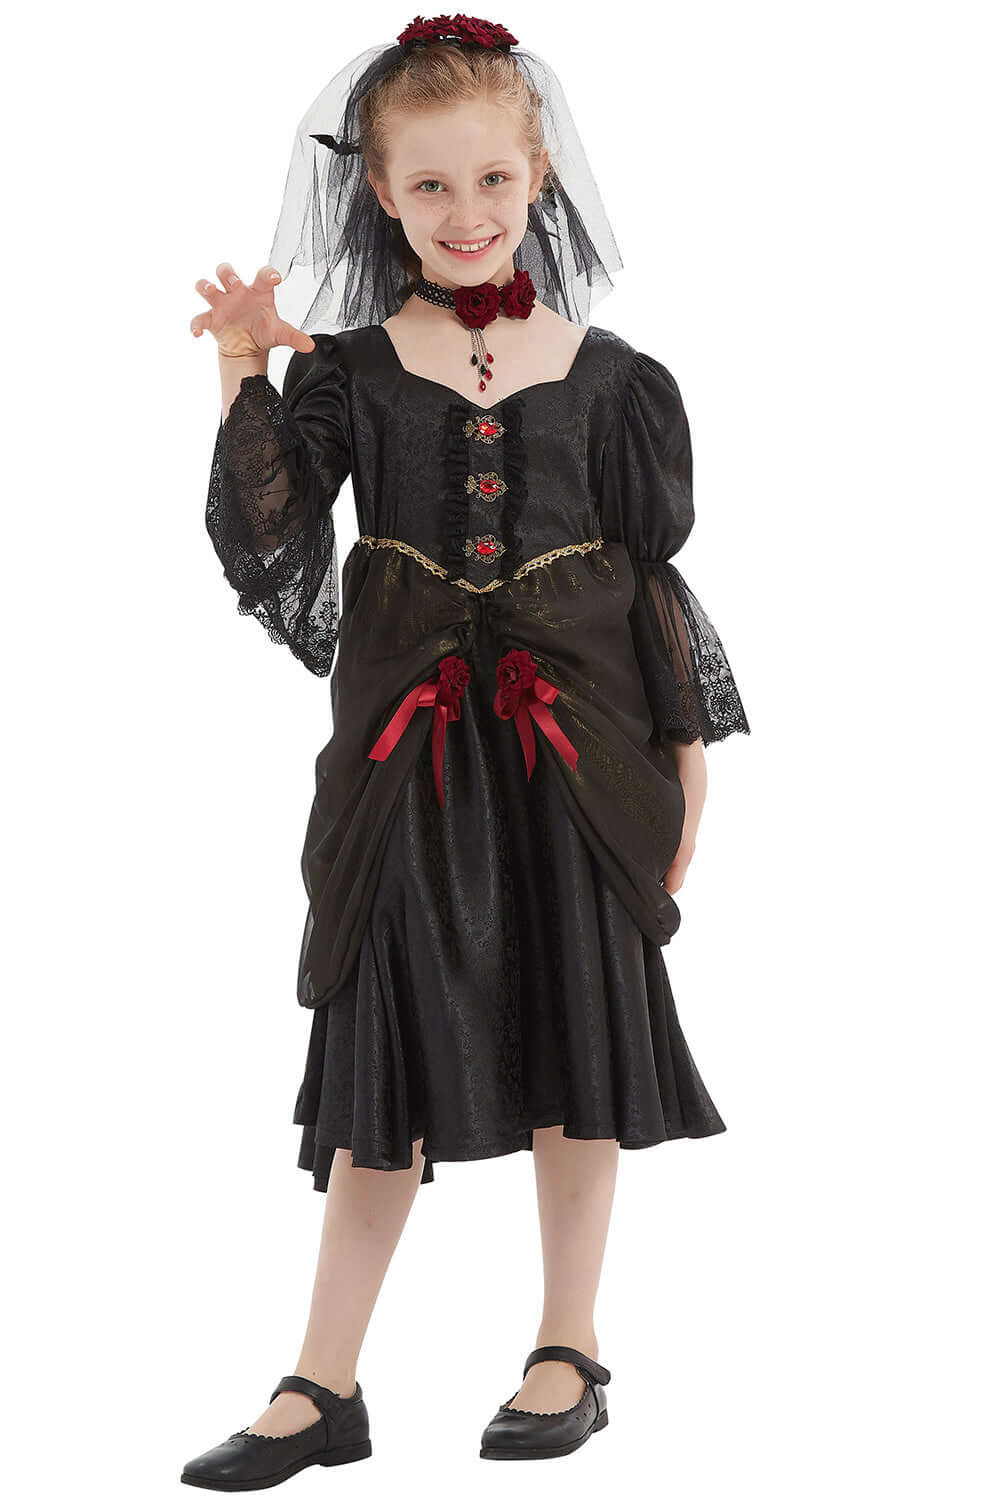 Halloween Vampire Enfant Costume